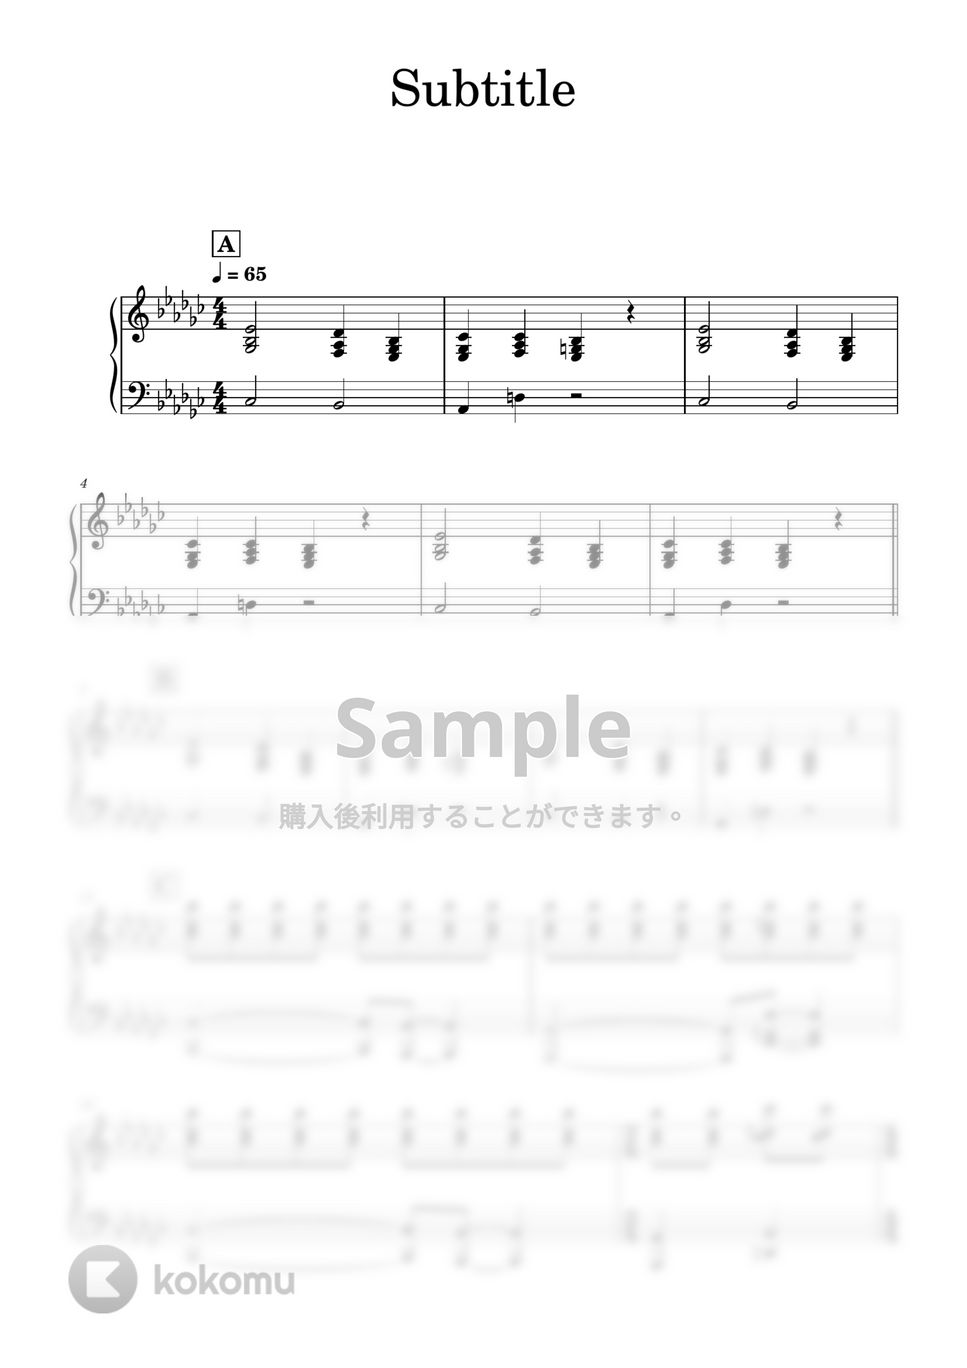 Official髭男dism - Subtitle (ピアノ伴奏) by やまといぶの伴奏